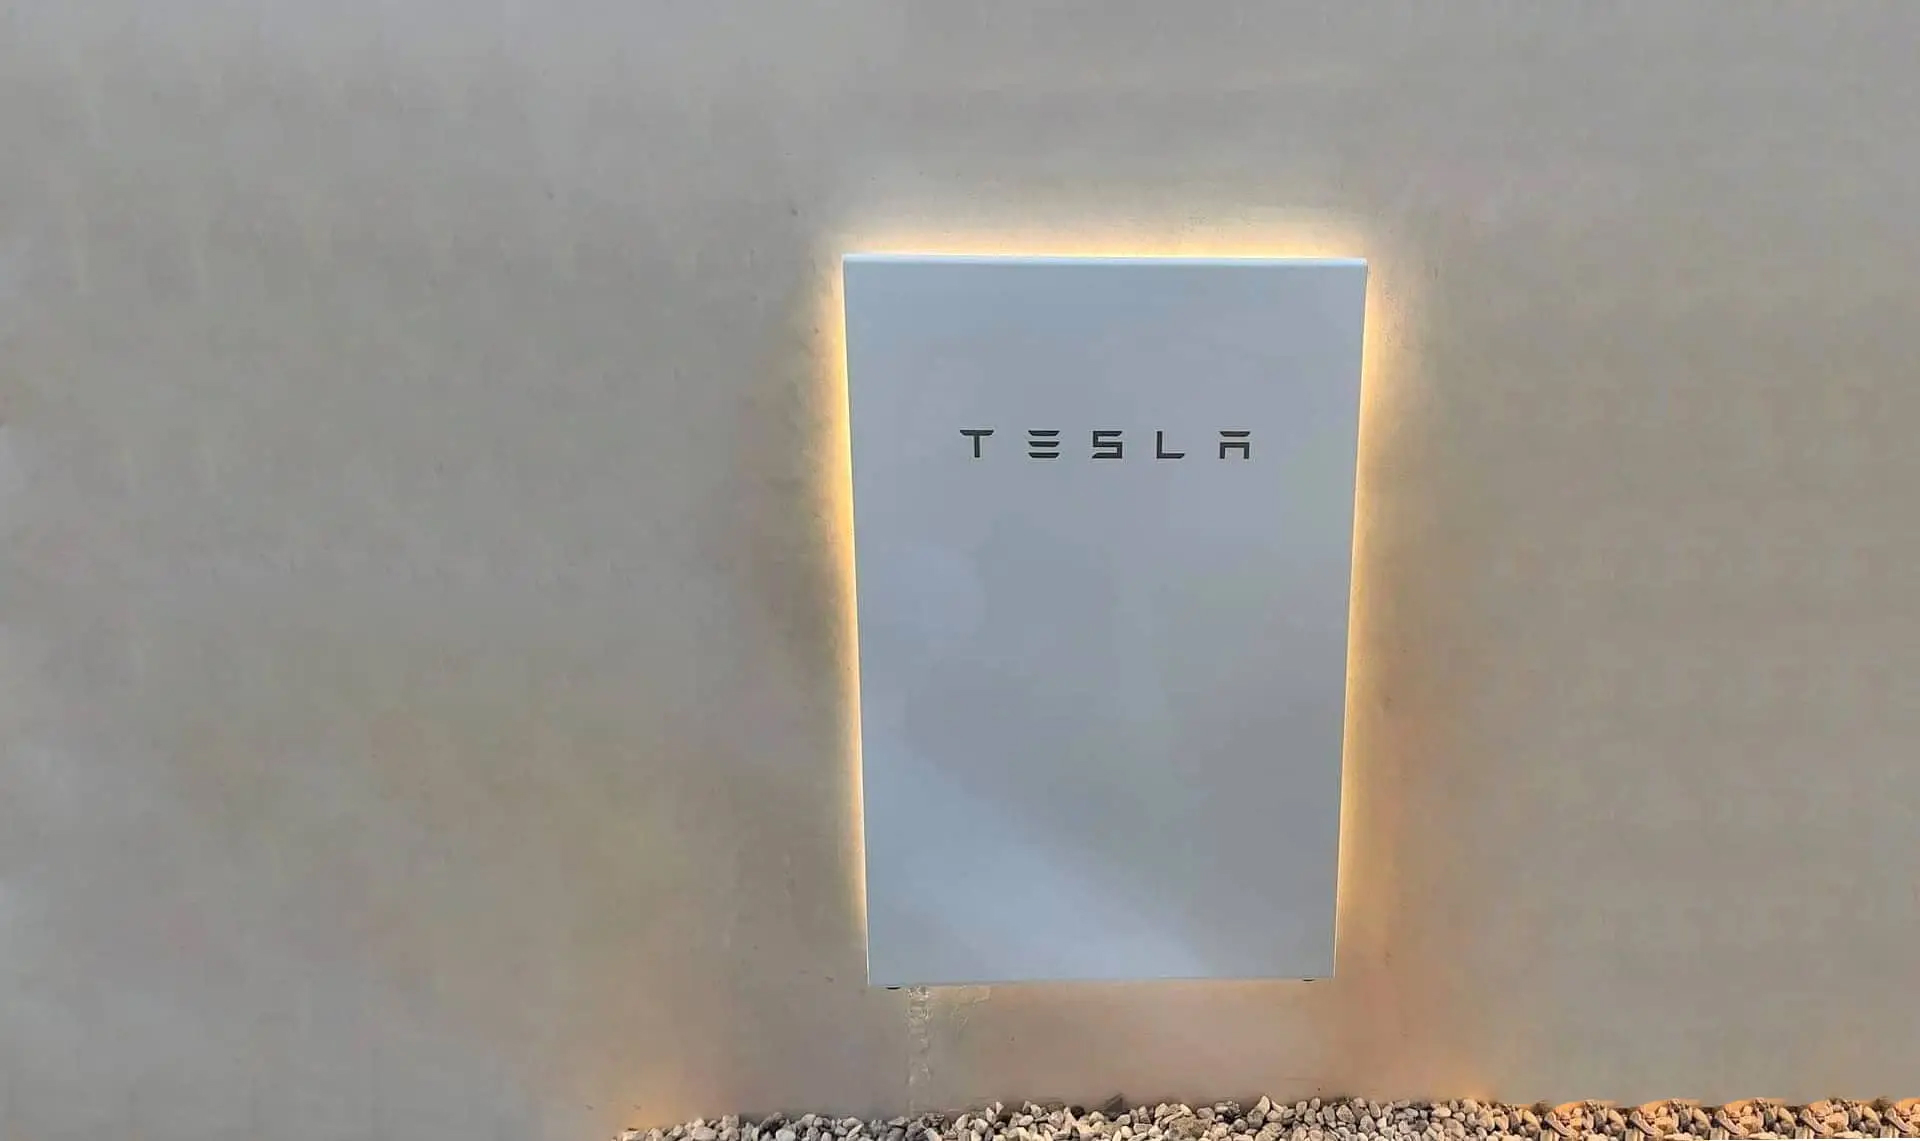 Tesla Solar Batteries